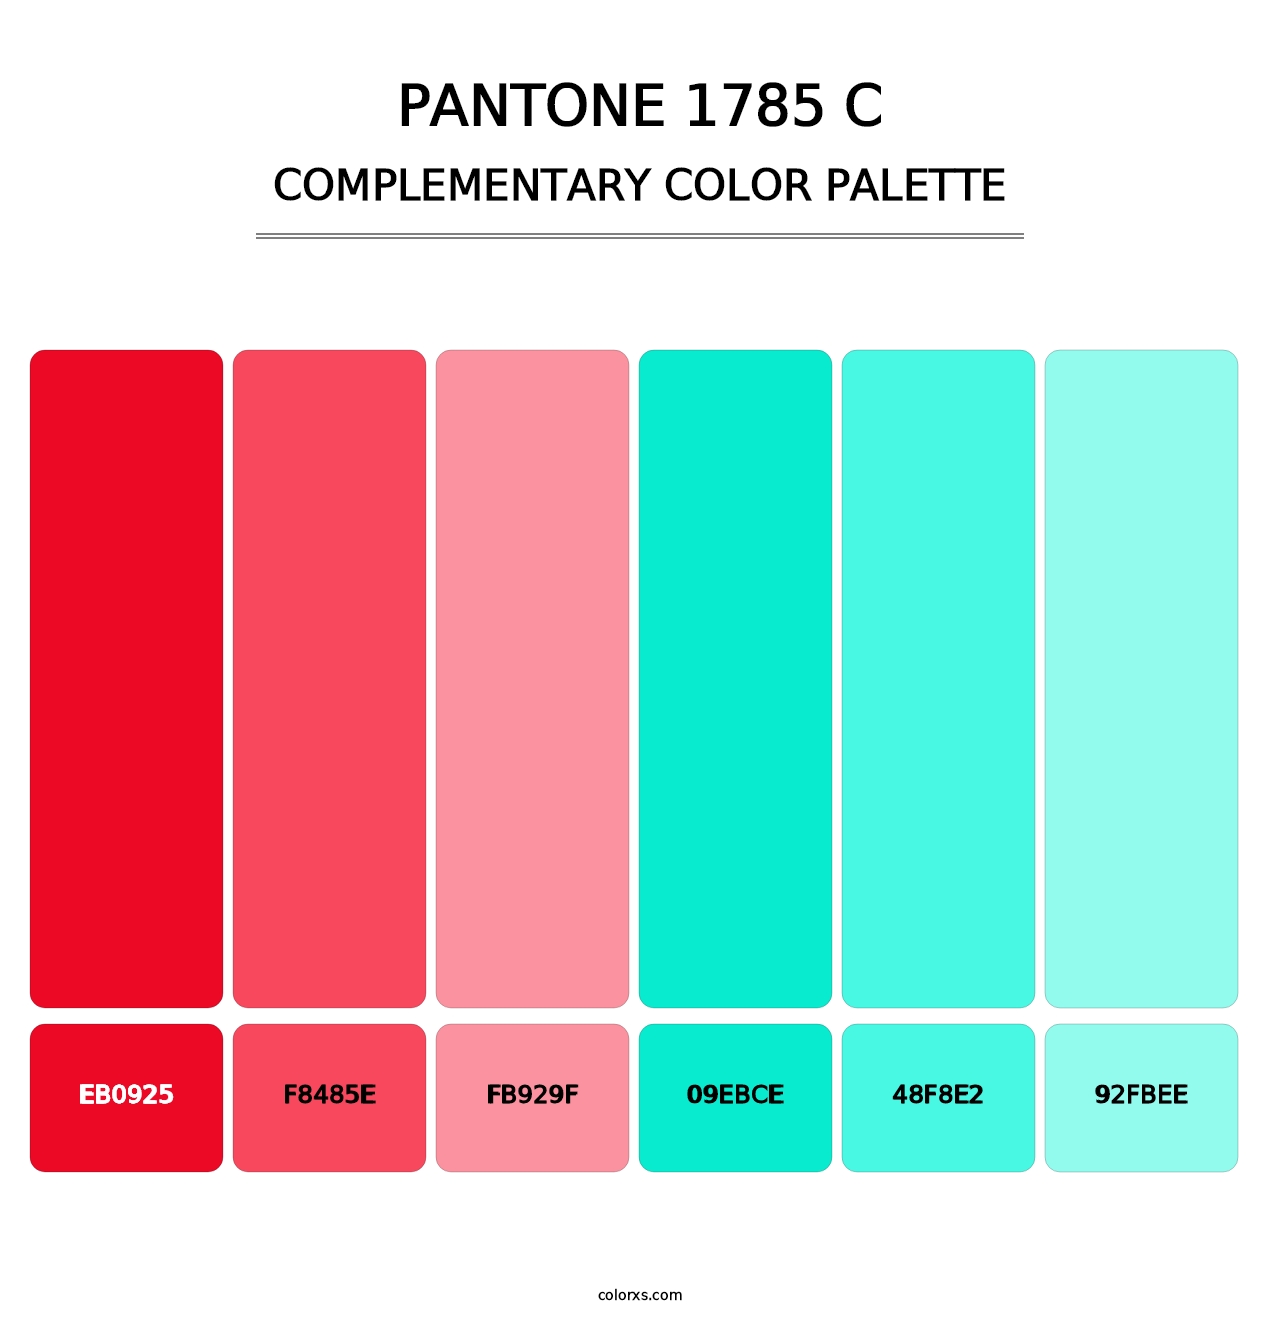 PANTONE 1785 C - Complementary Color Palette